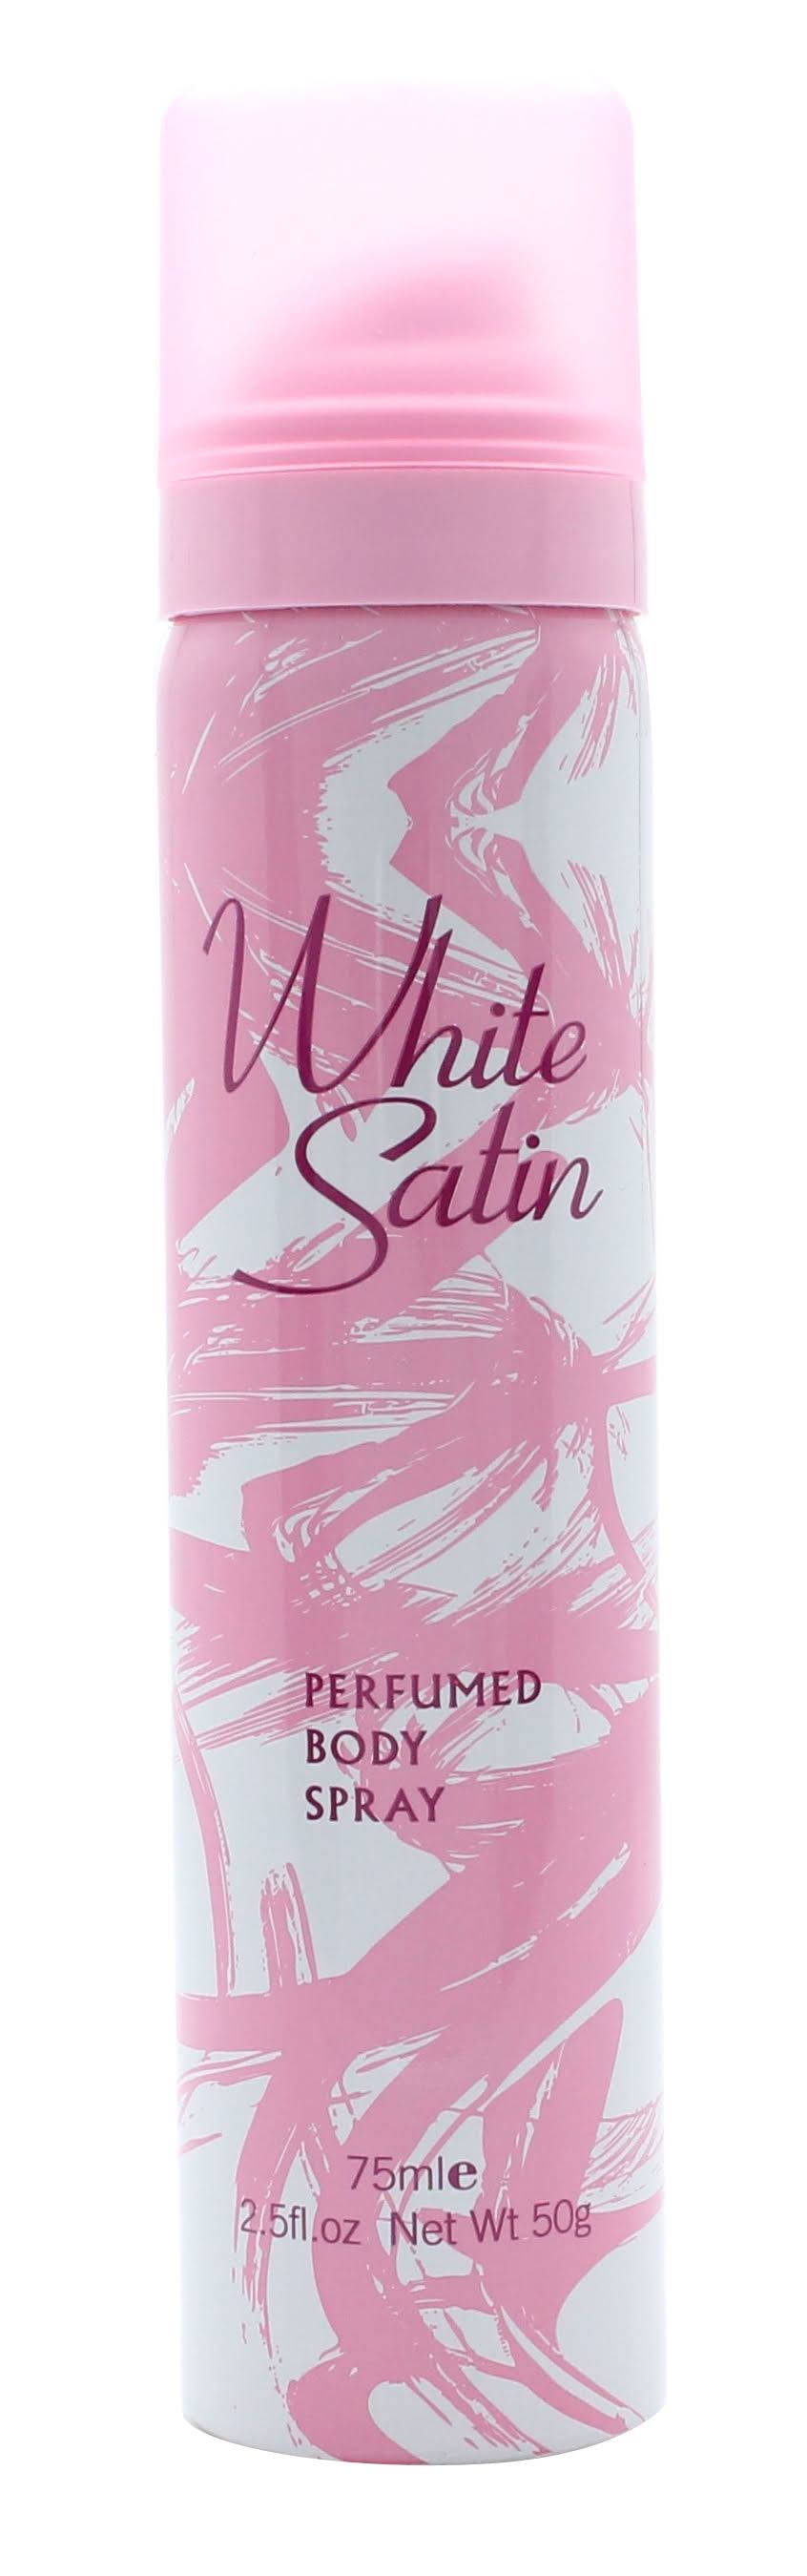 Taylor of London White Satin Body Spray, 75 ml